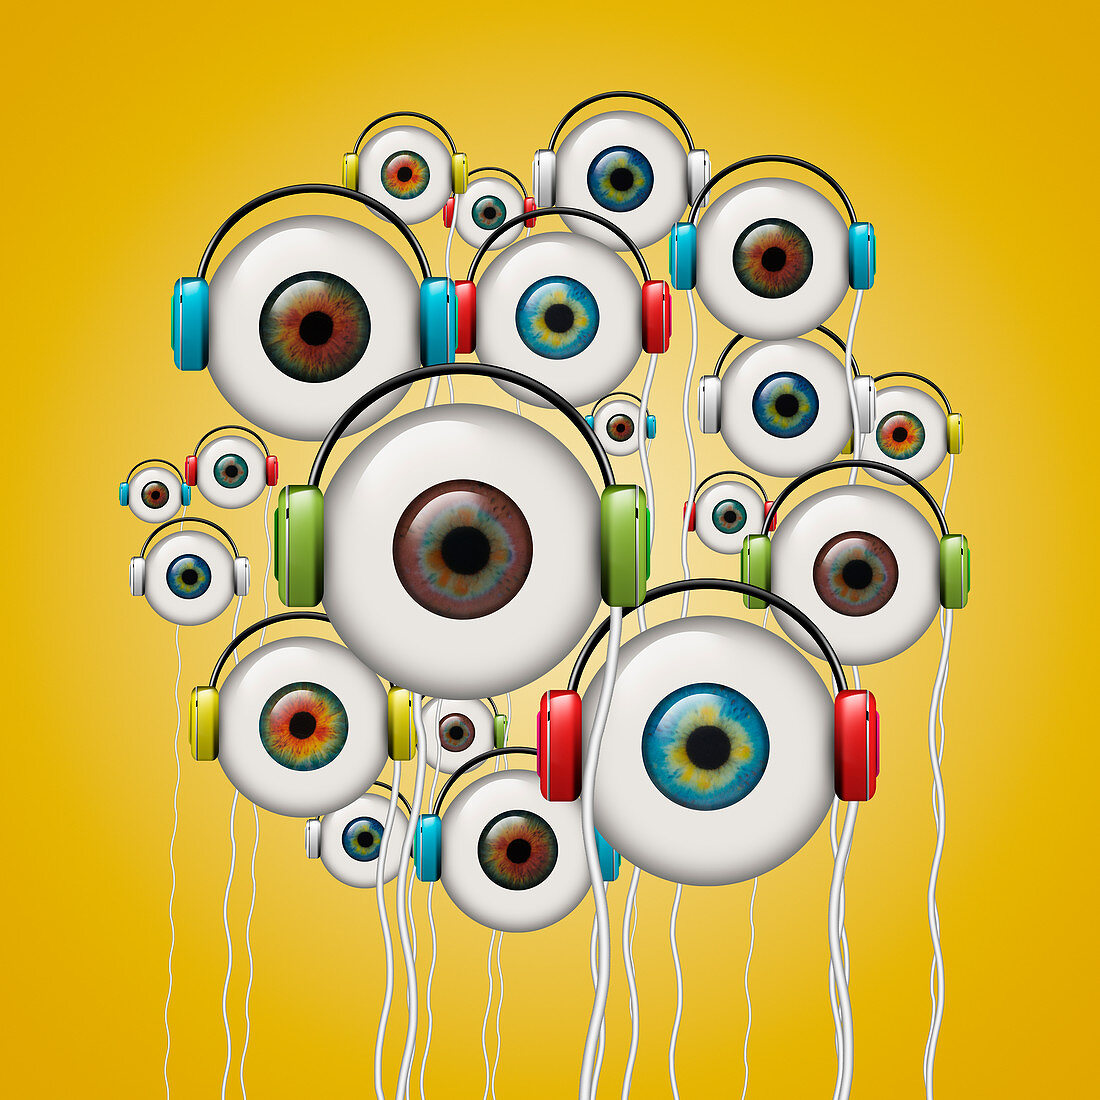 Eyeballs with headphones, illustration